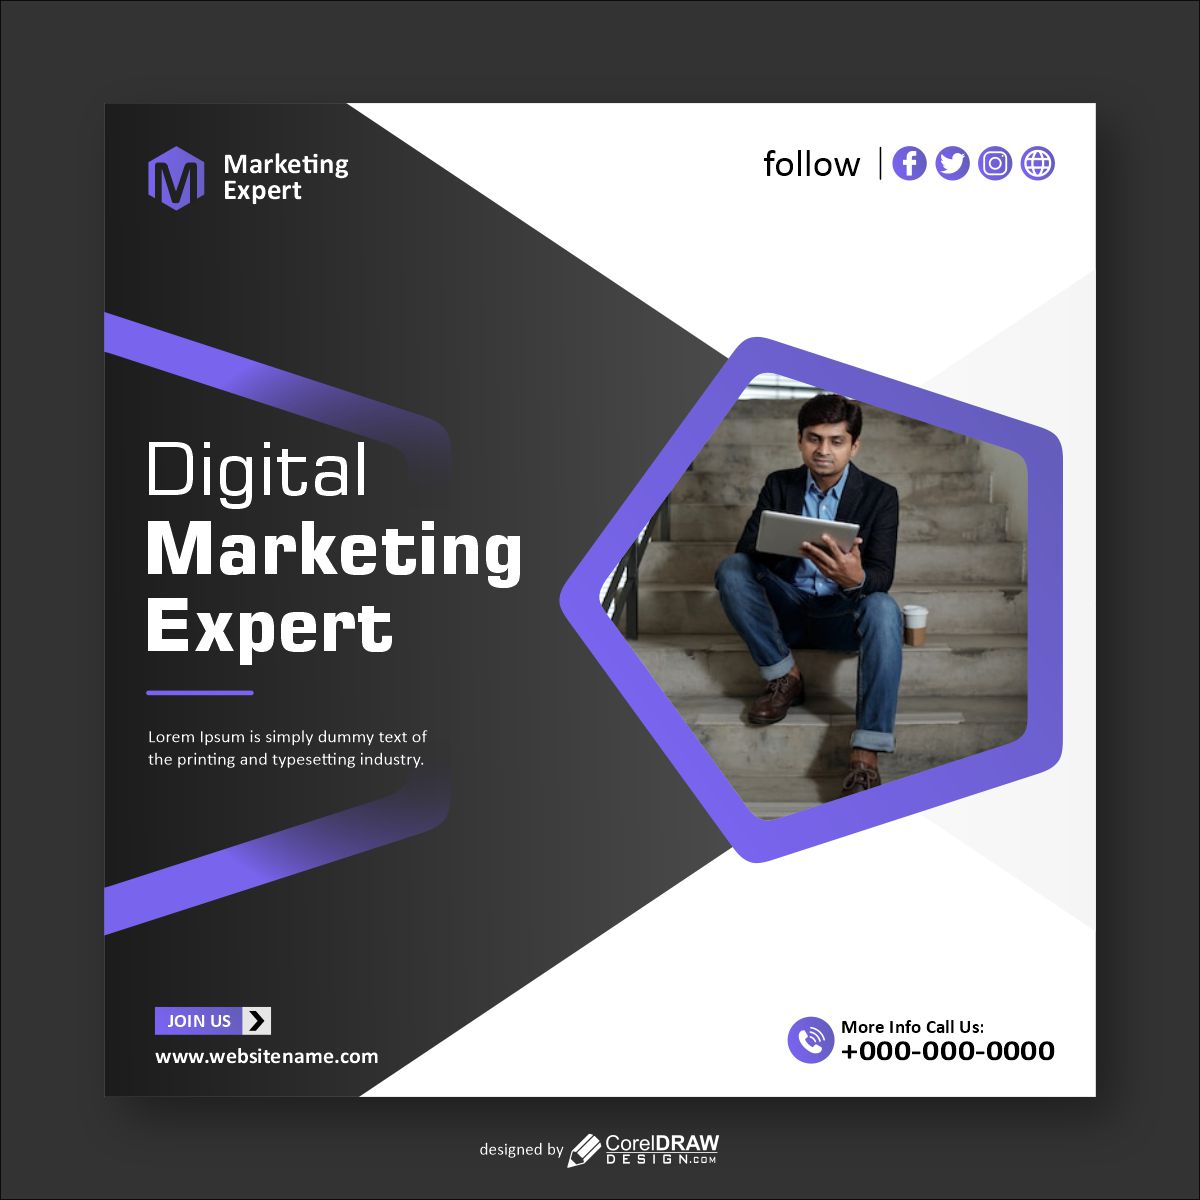 Digital Marketing Expert new poster image vector free design